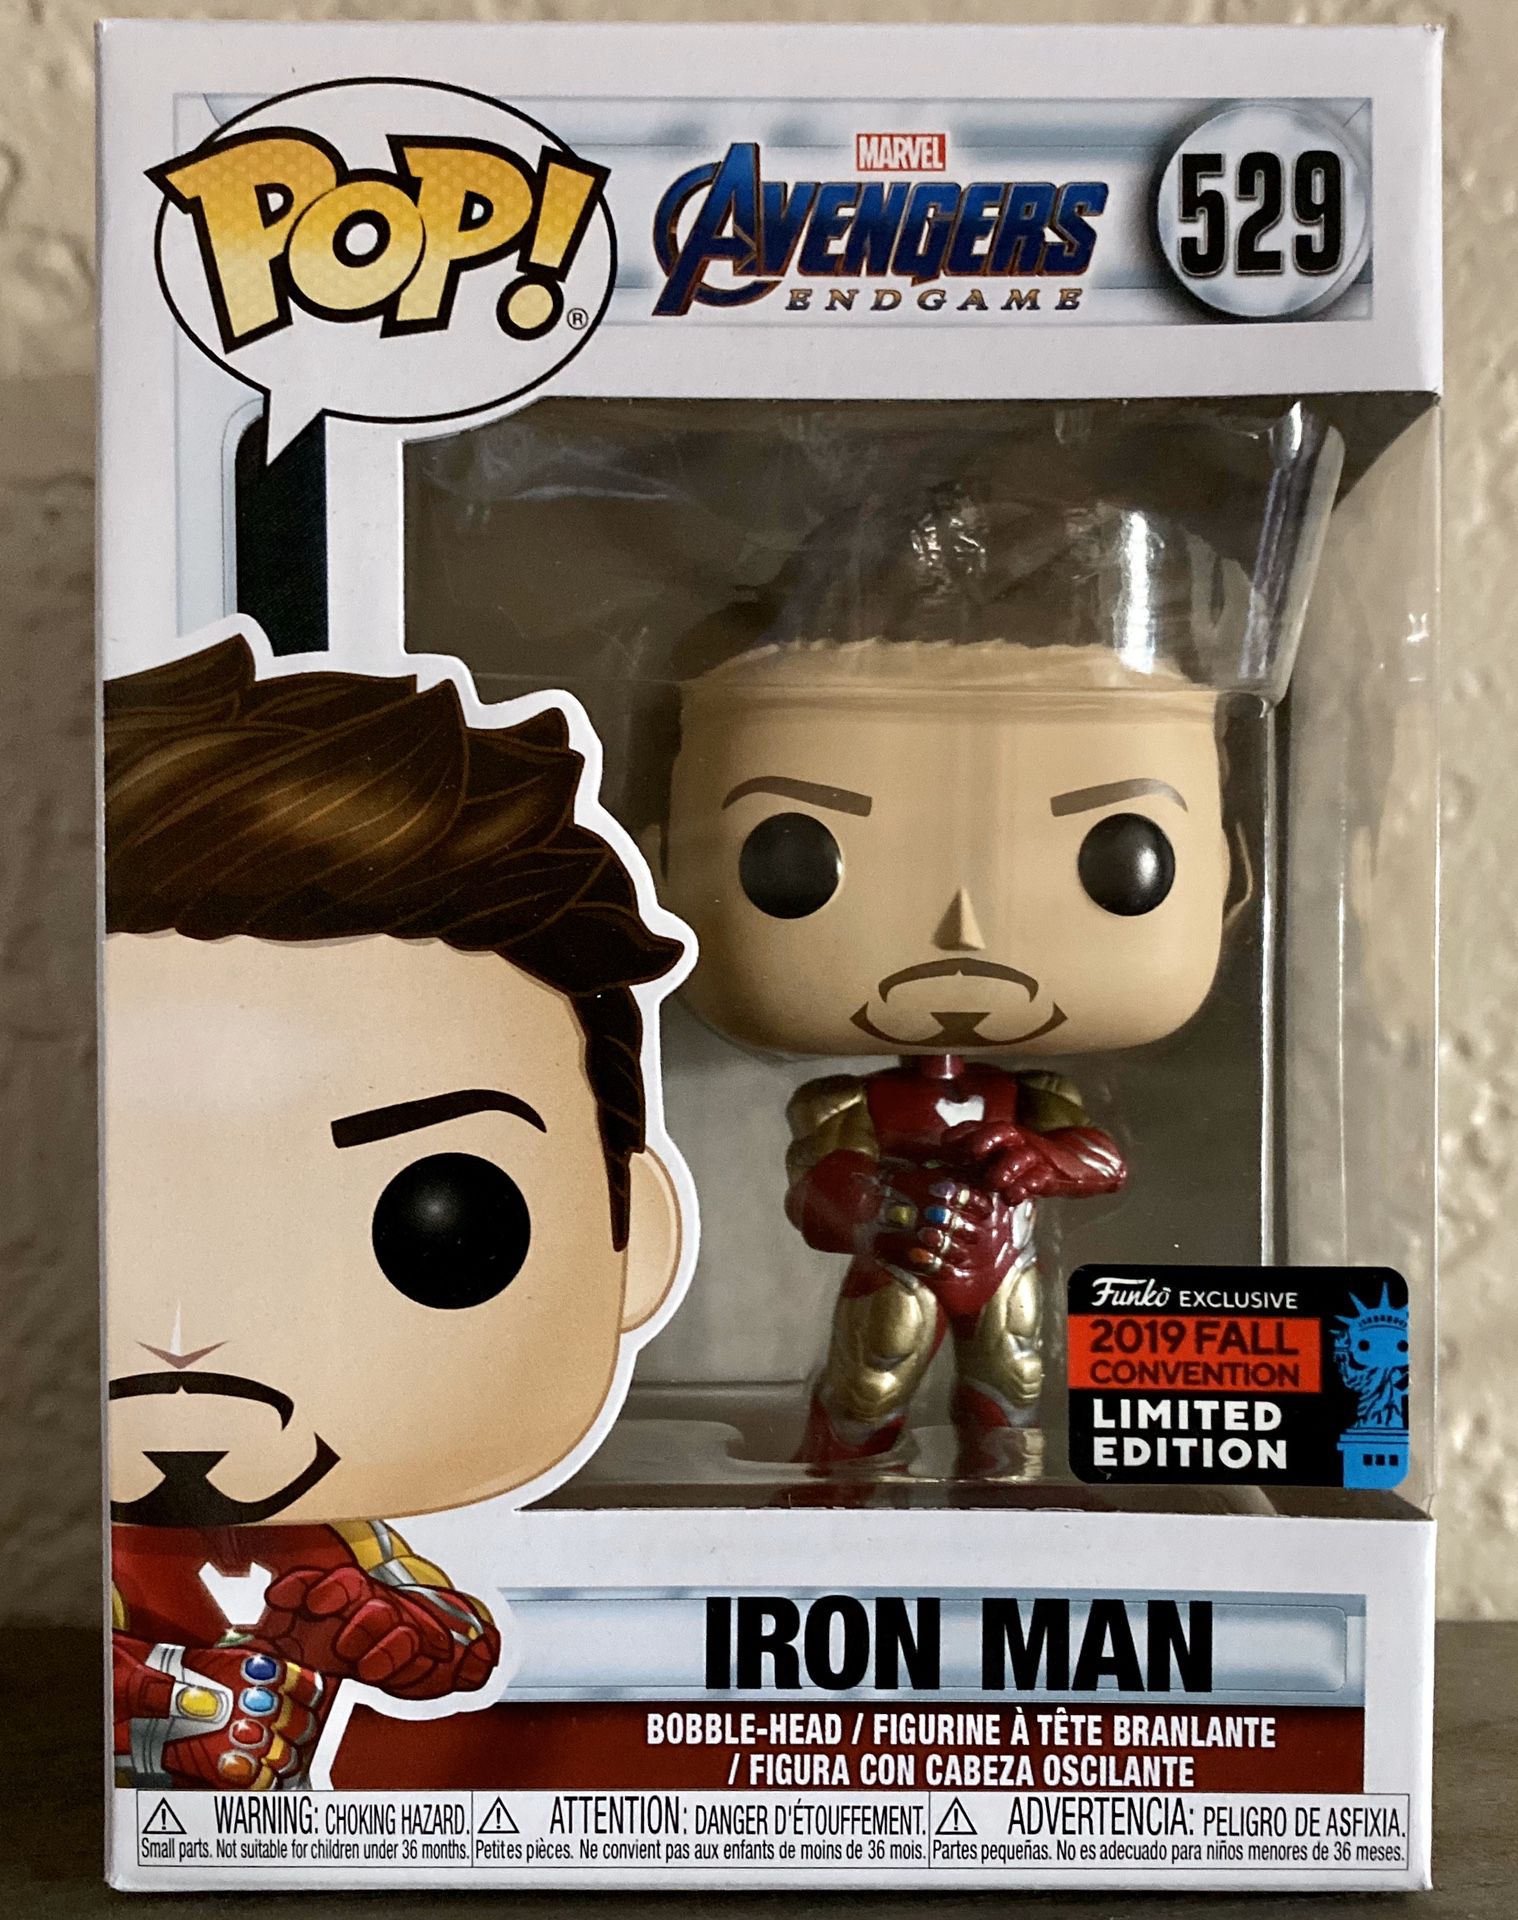 NYCC 2019 Amazon Shared Exclusive Avengers Endgame Iron Man 529 Funko Pop